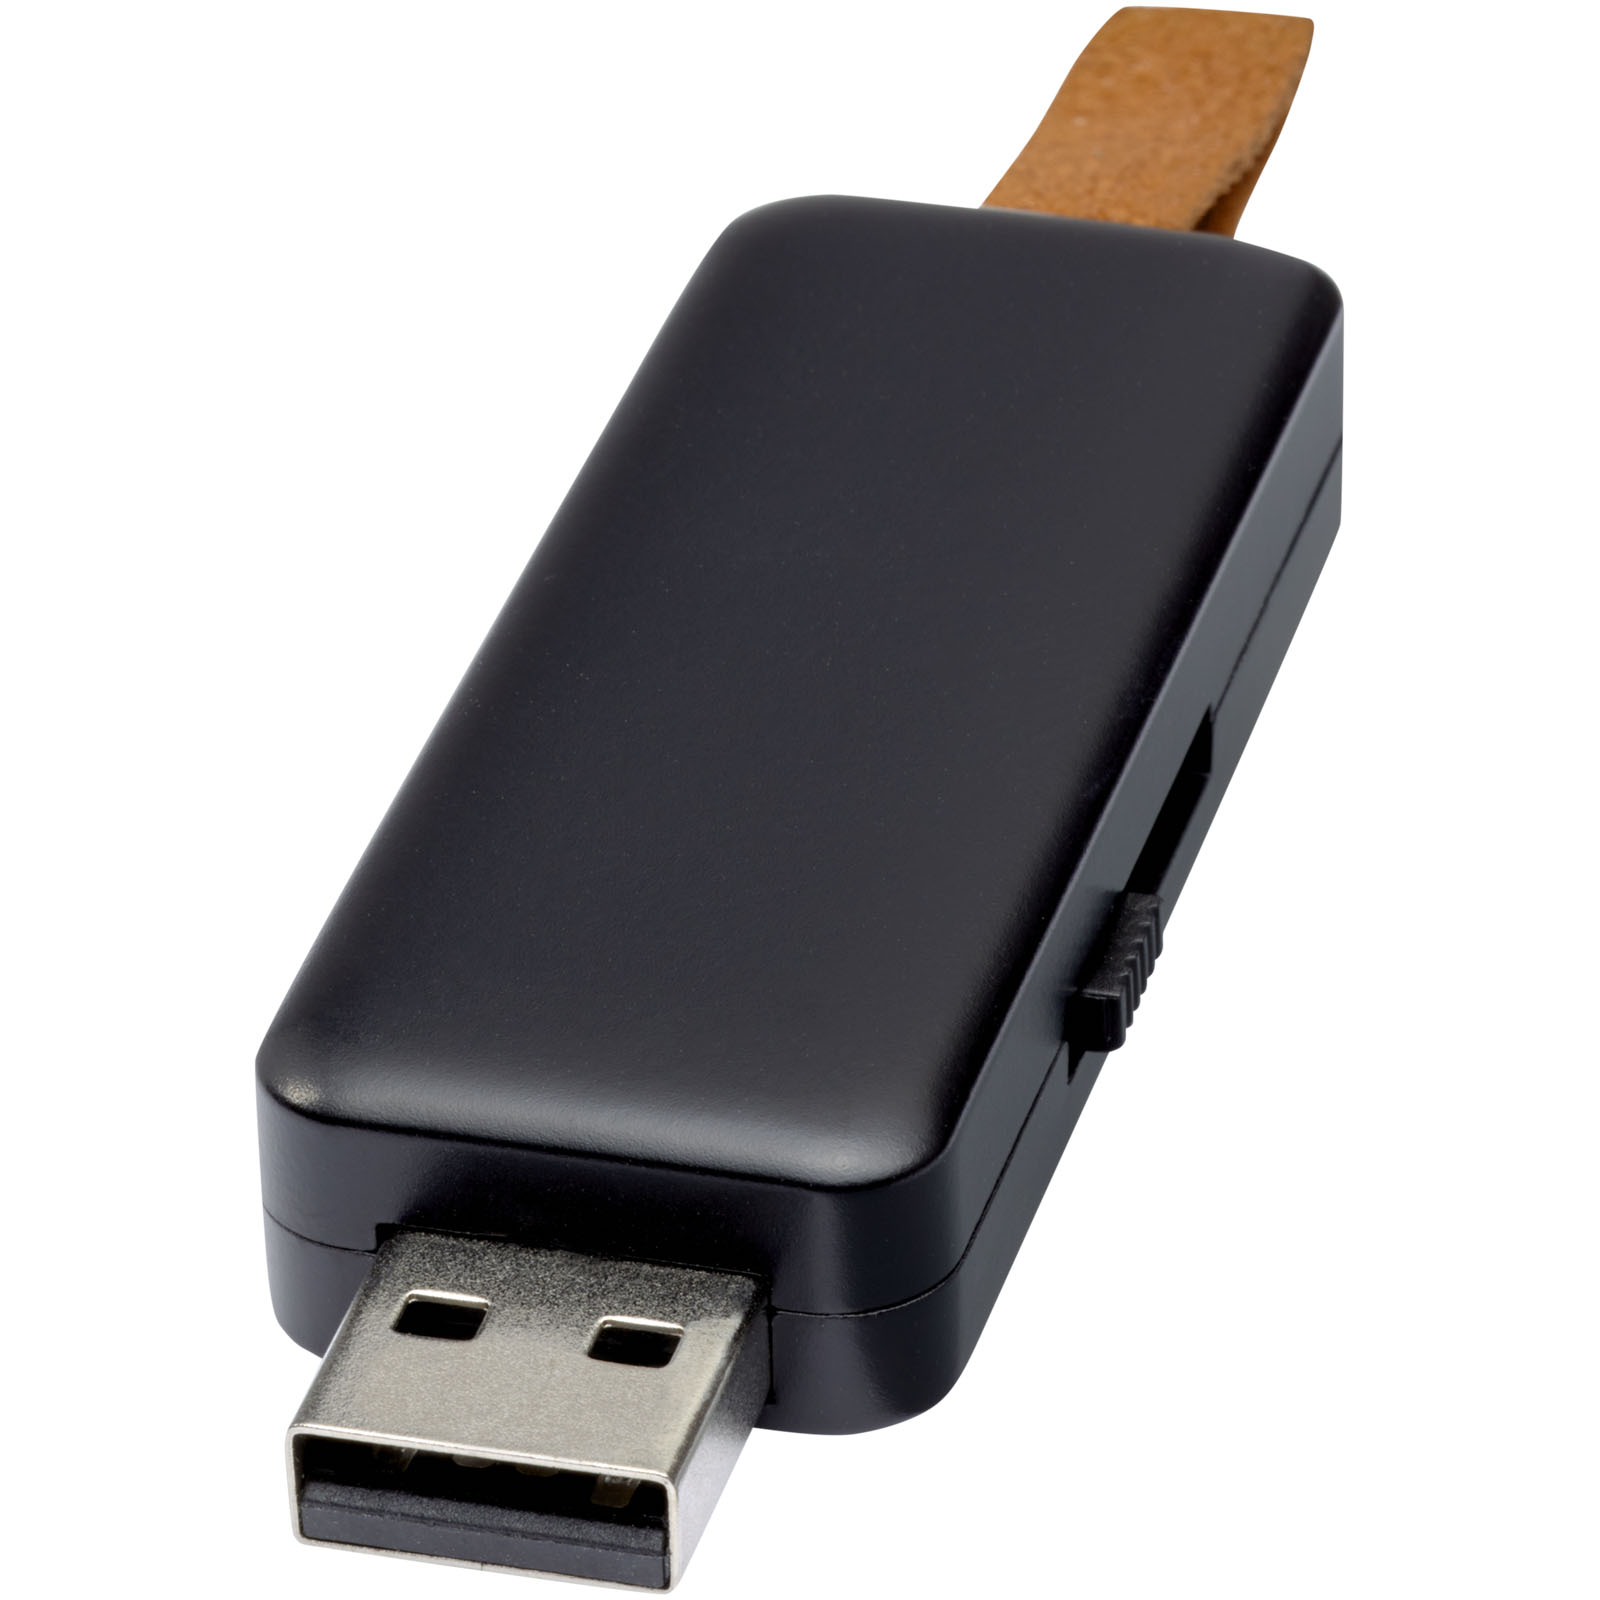 Clés USB publicitaires - Clé USB lumineuse Gleam 8 Go